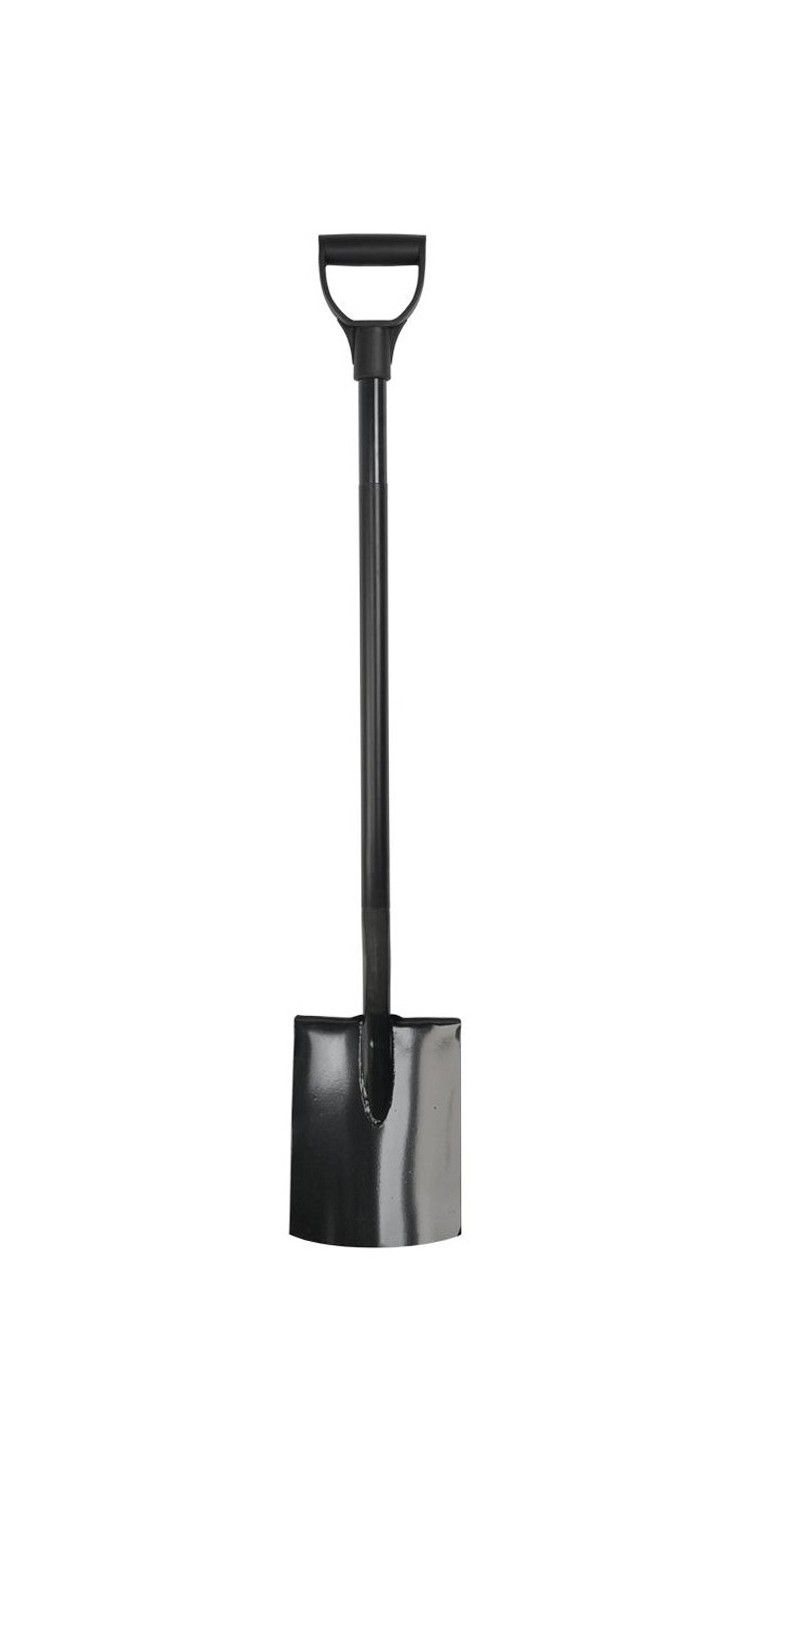 Інструкція лопата Neo Tools 95-006